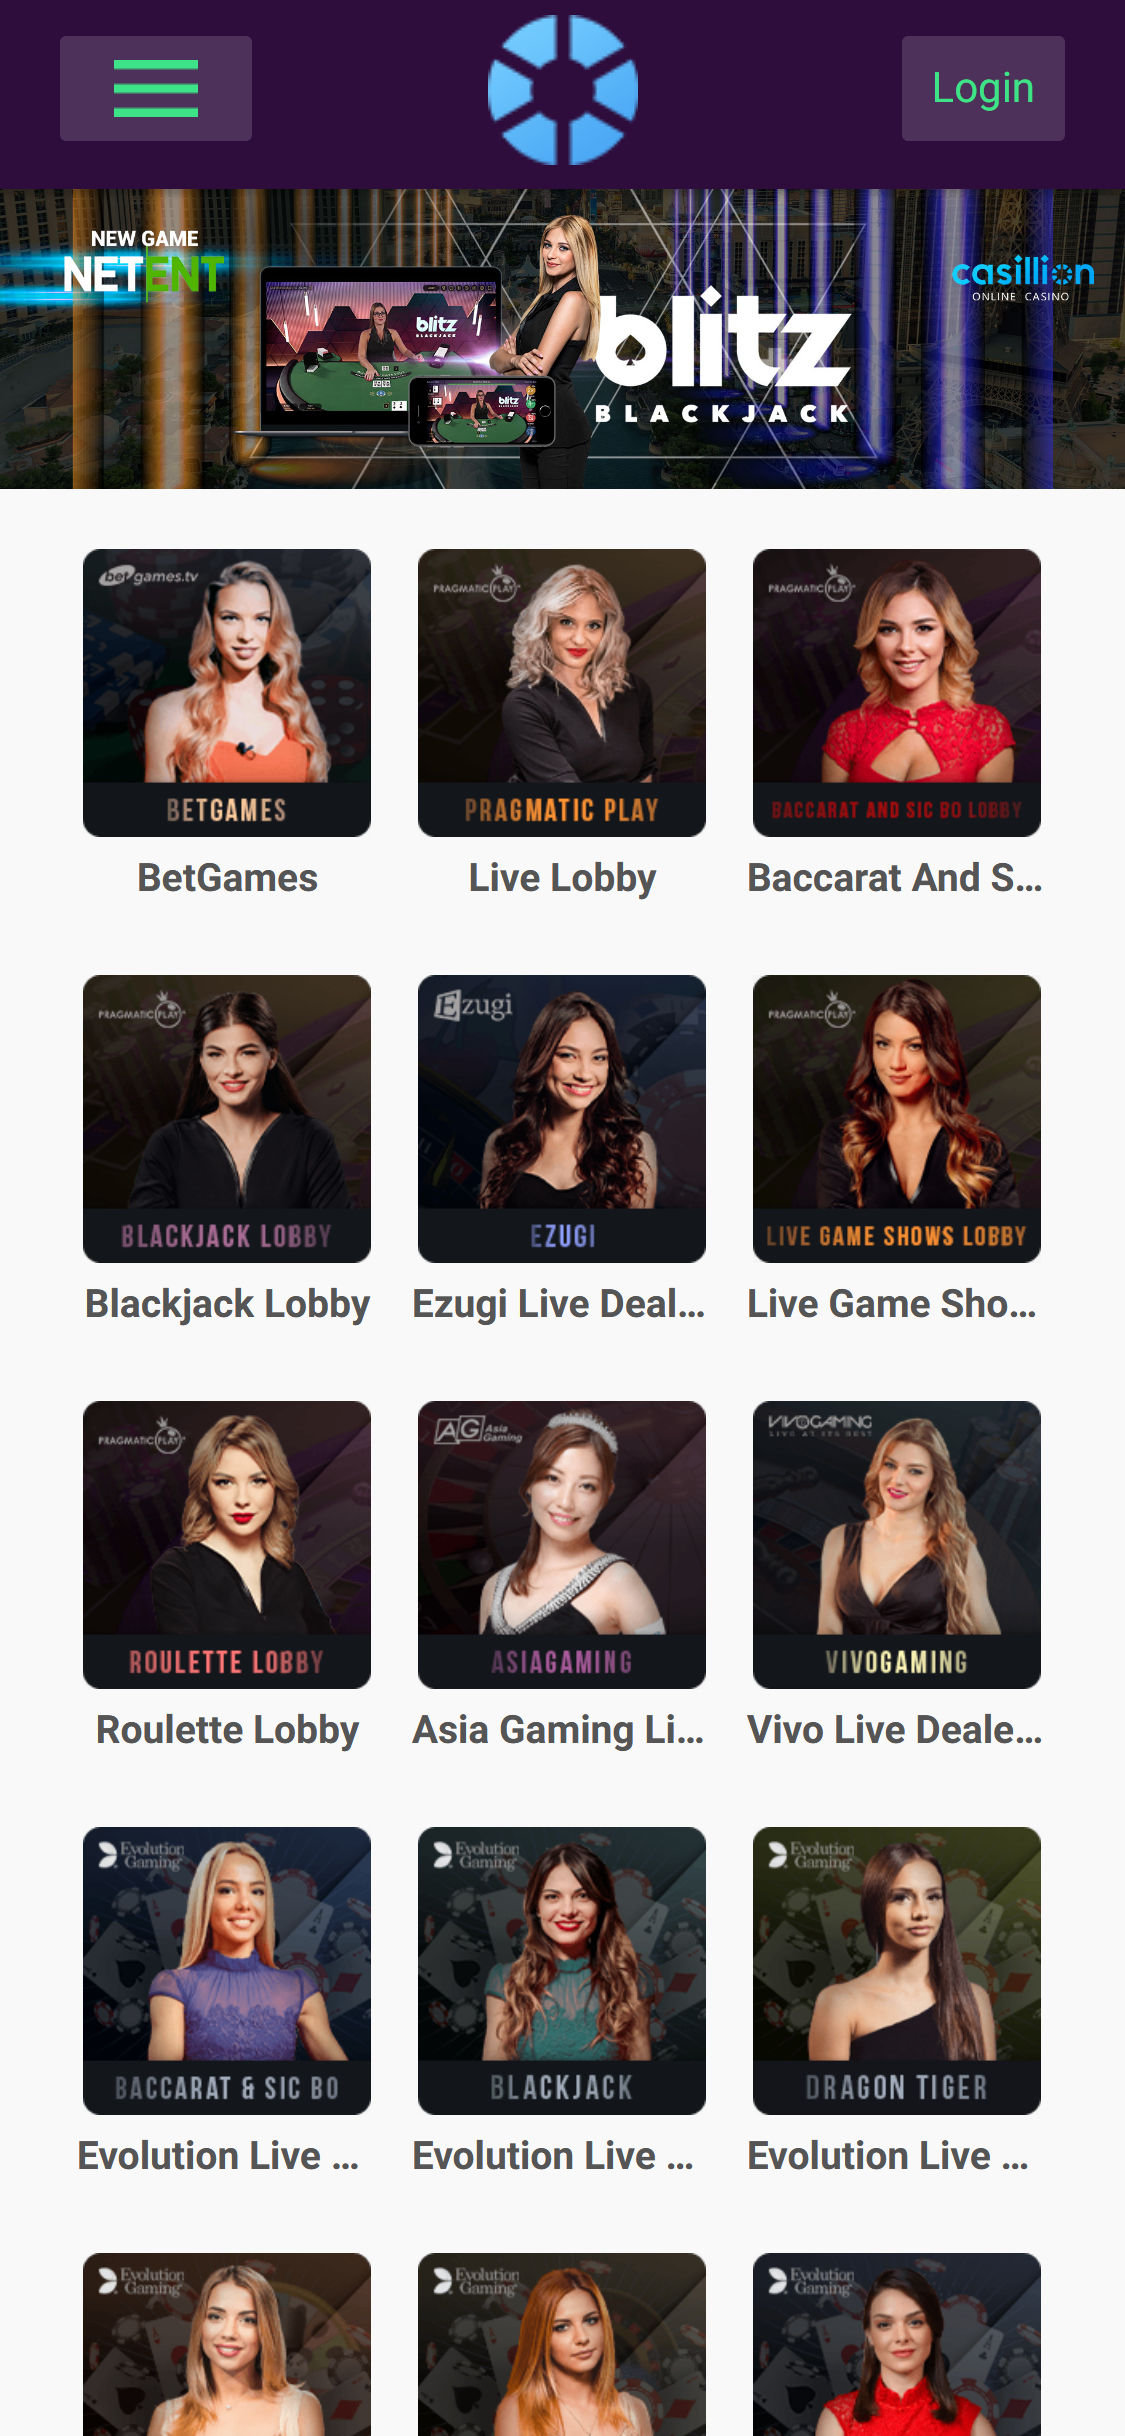 Casillion Casino Mobile Live Dealer Games Review